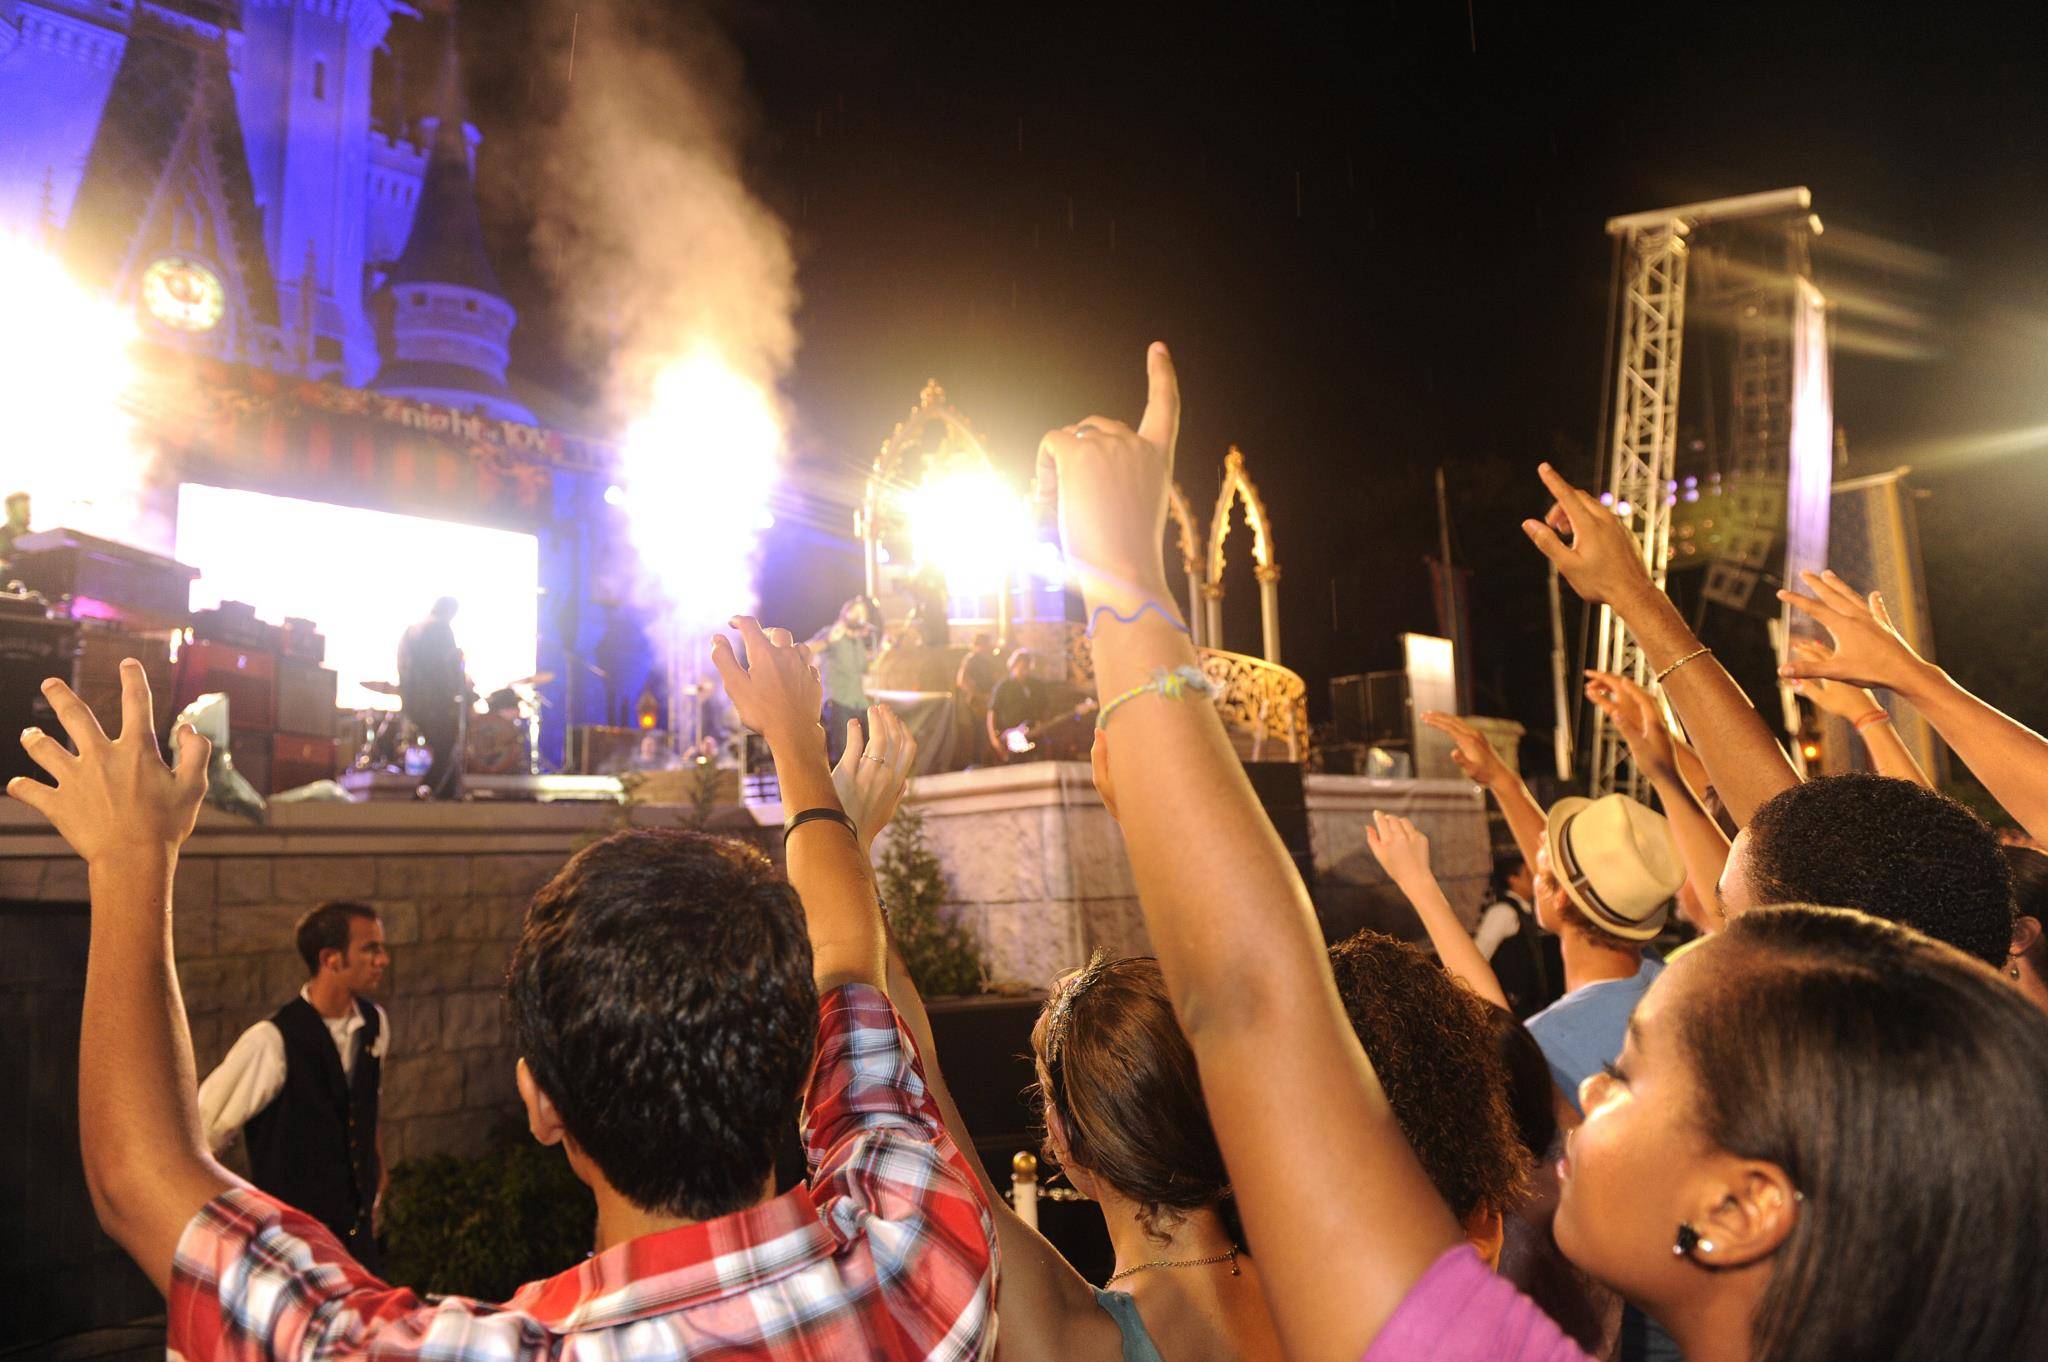 Walt Disney World will not host any further Night of Joy events